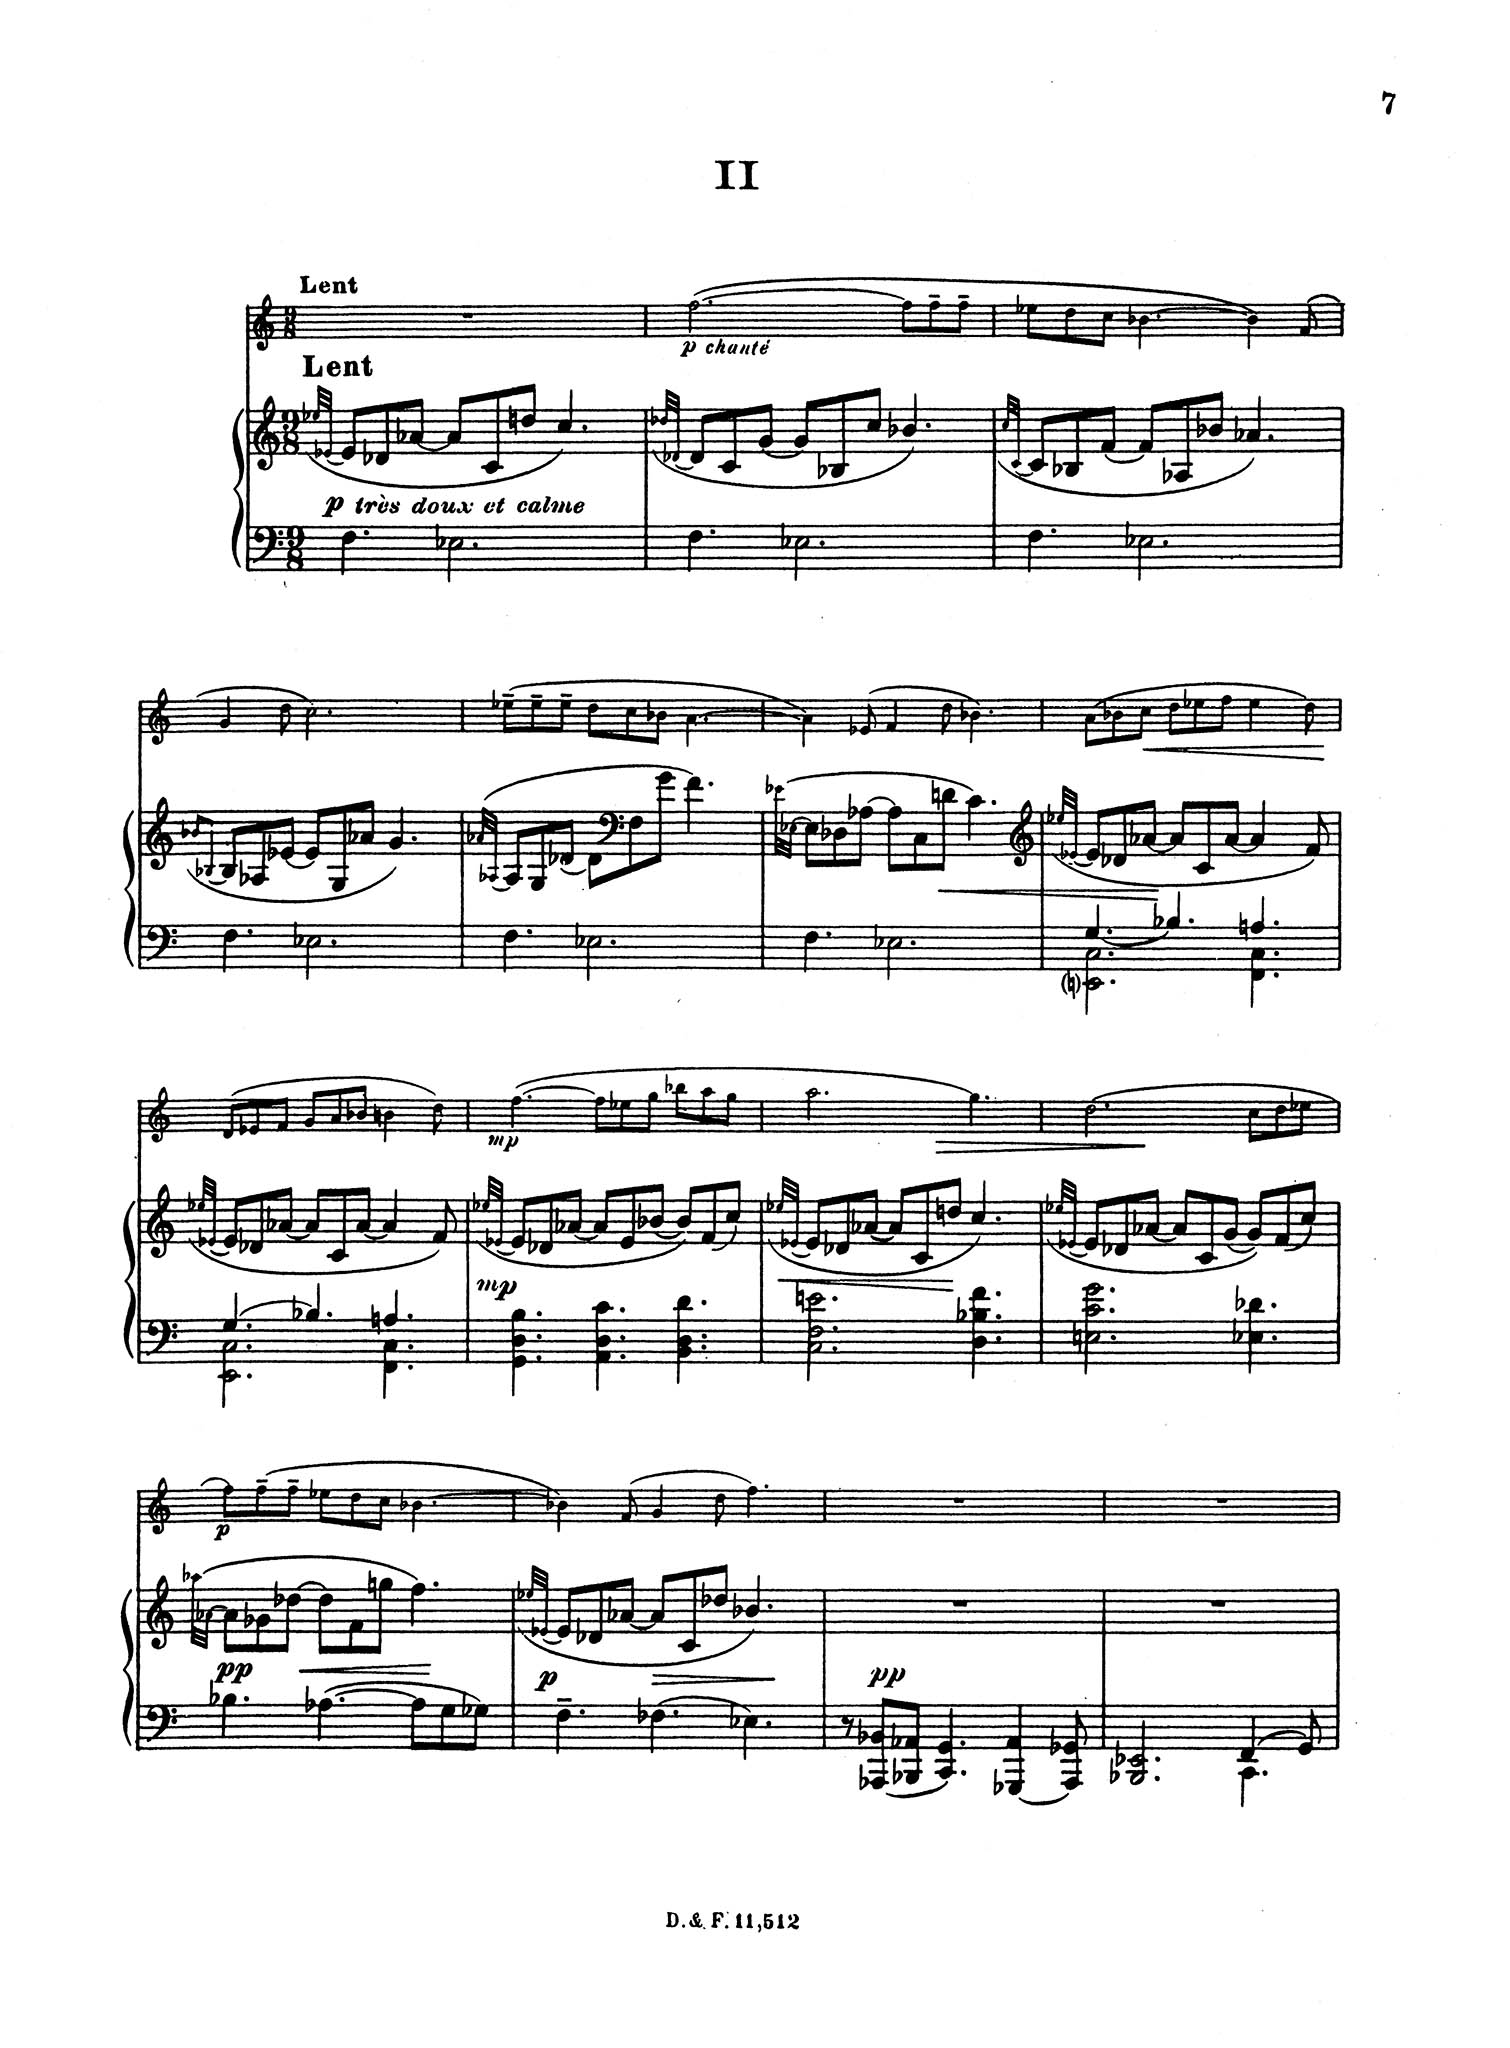 Sonatina, Op. 100 - Movement 2